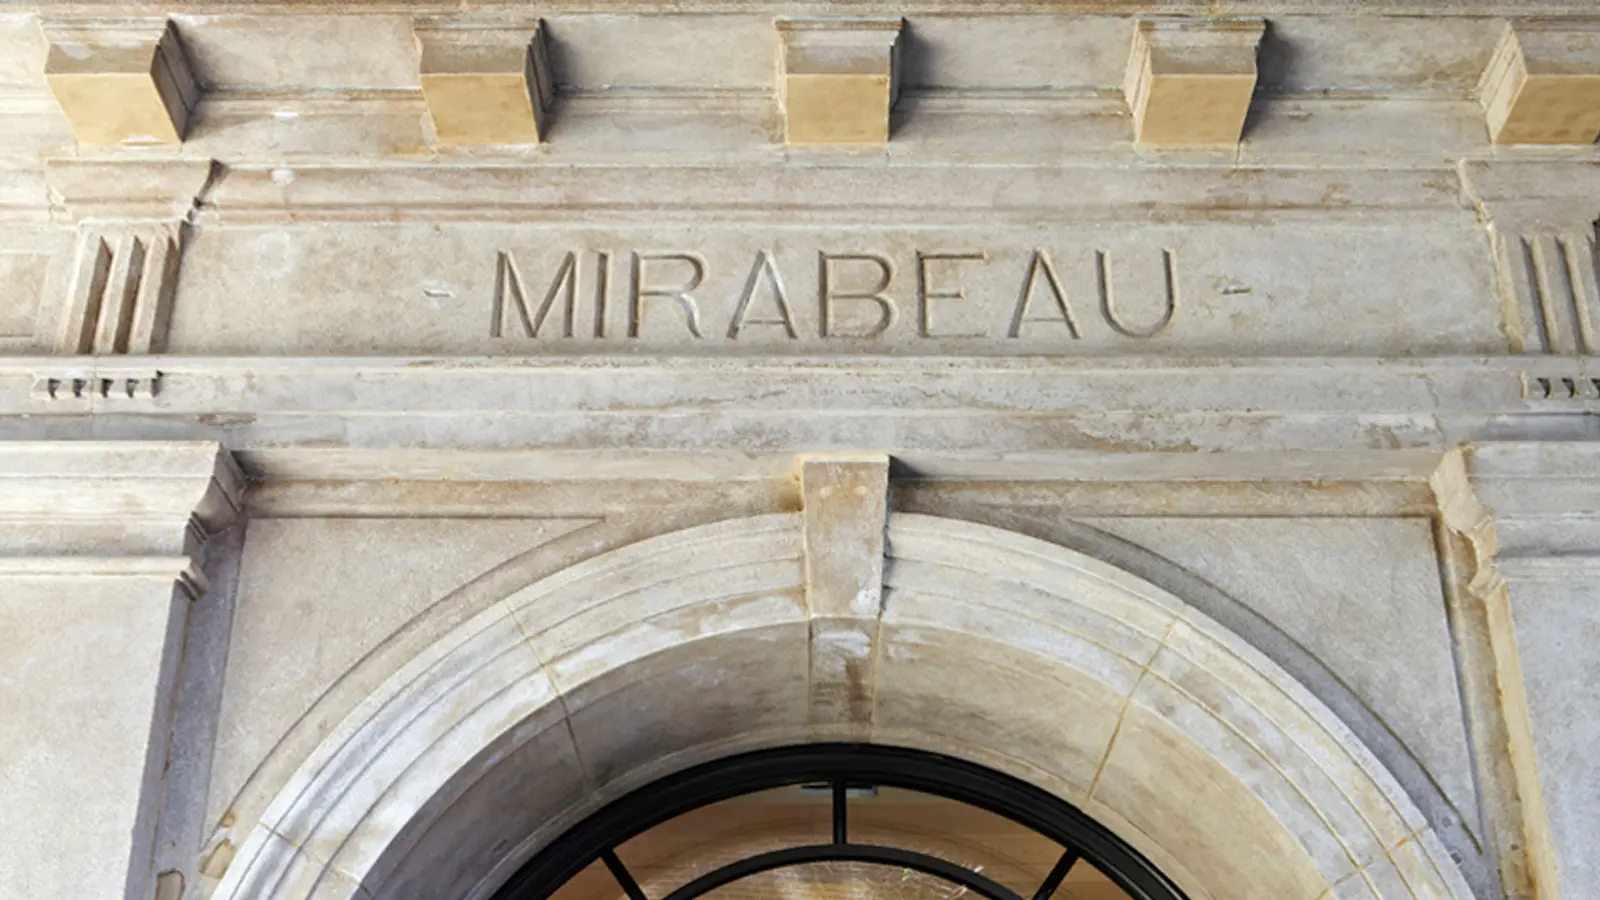 The Mirabeau, 165 West 91st Street